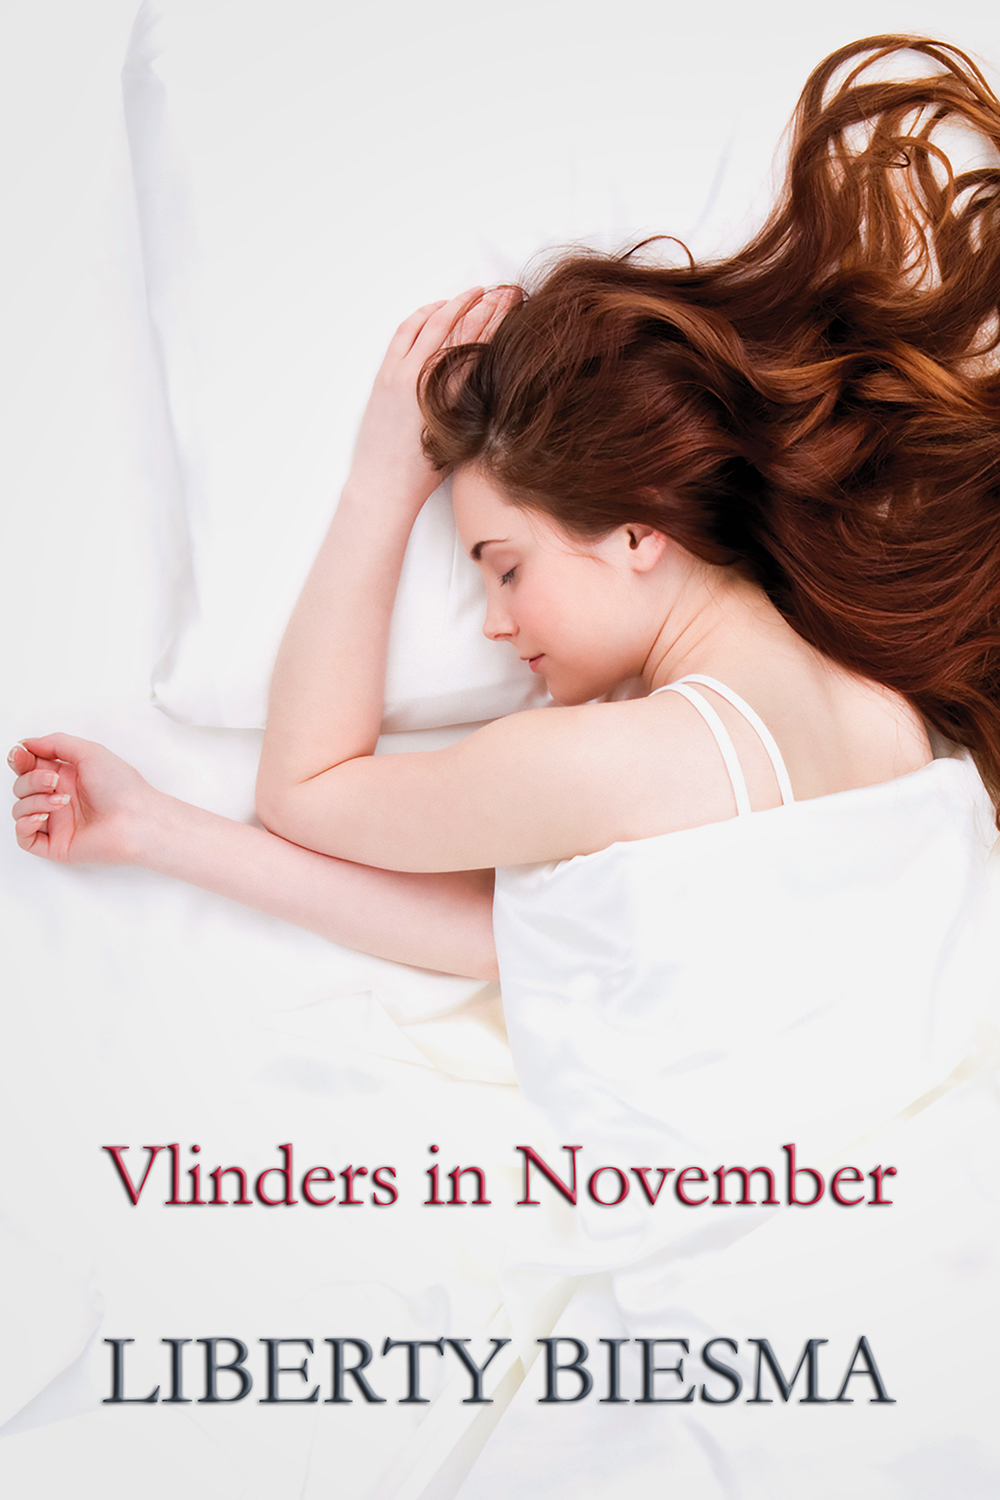 Vlinders in November - A short story by Liberty Biesma